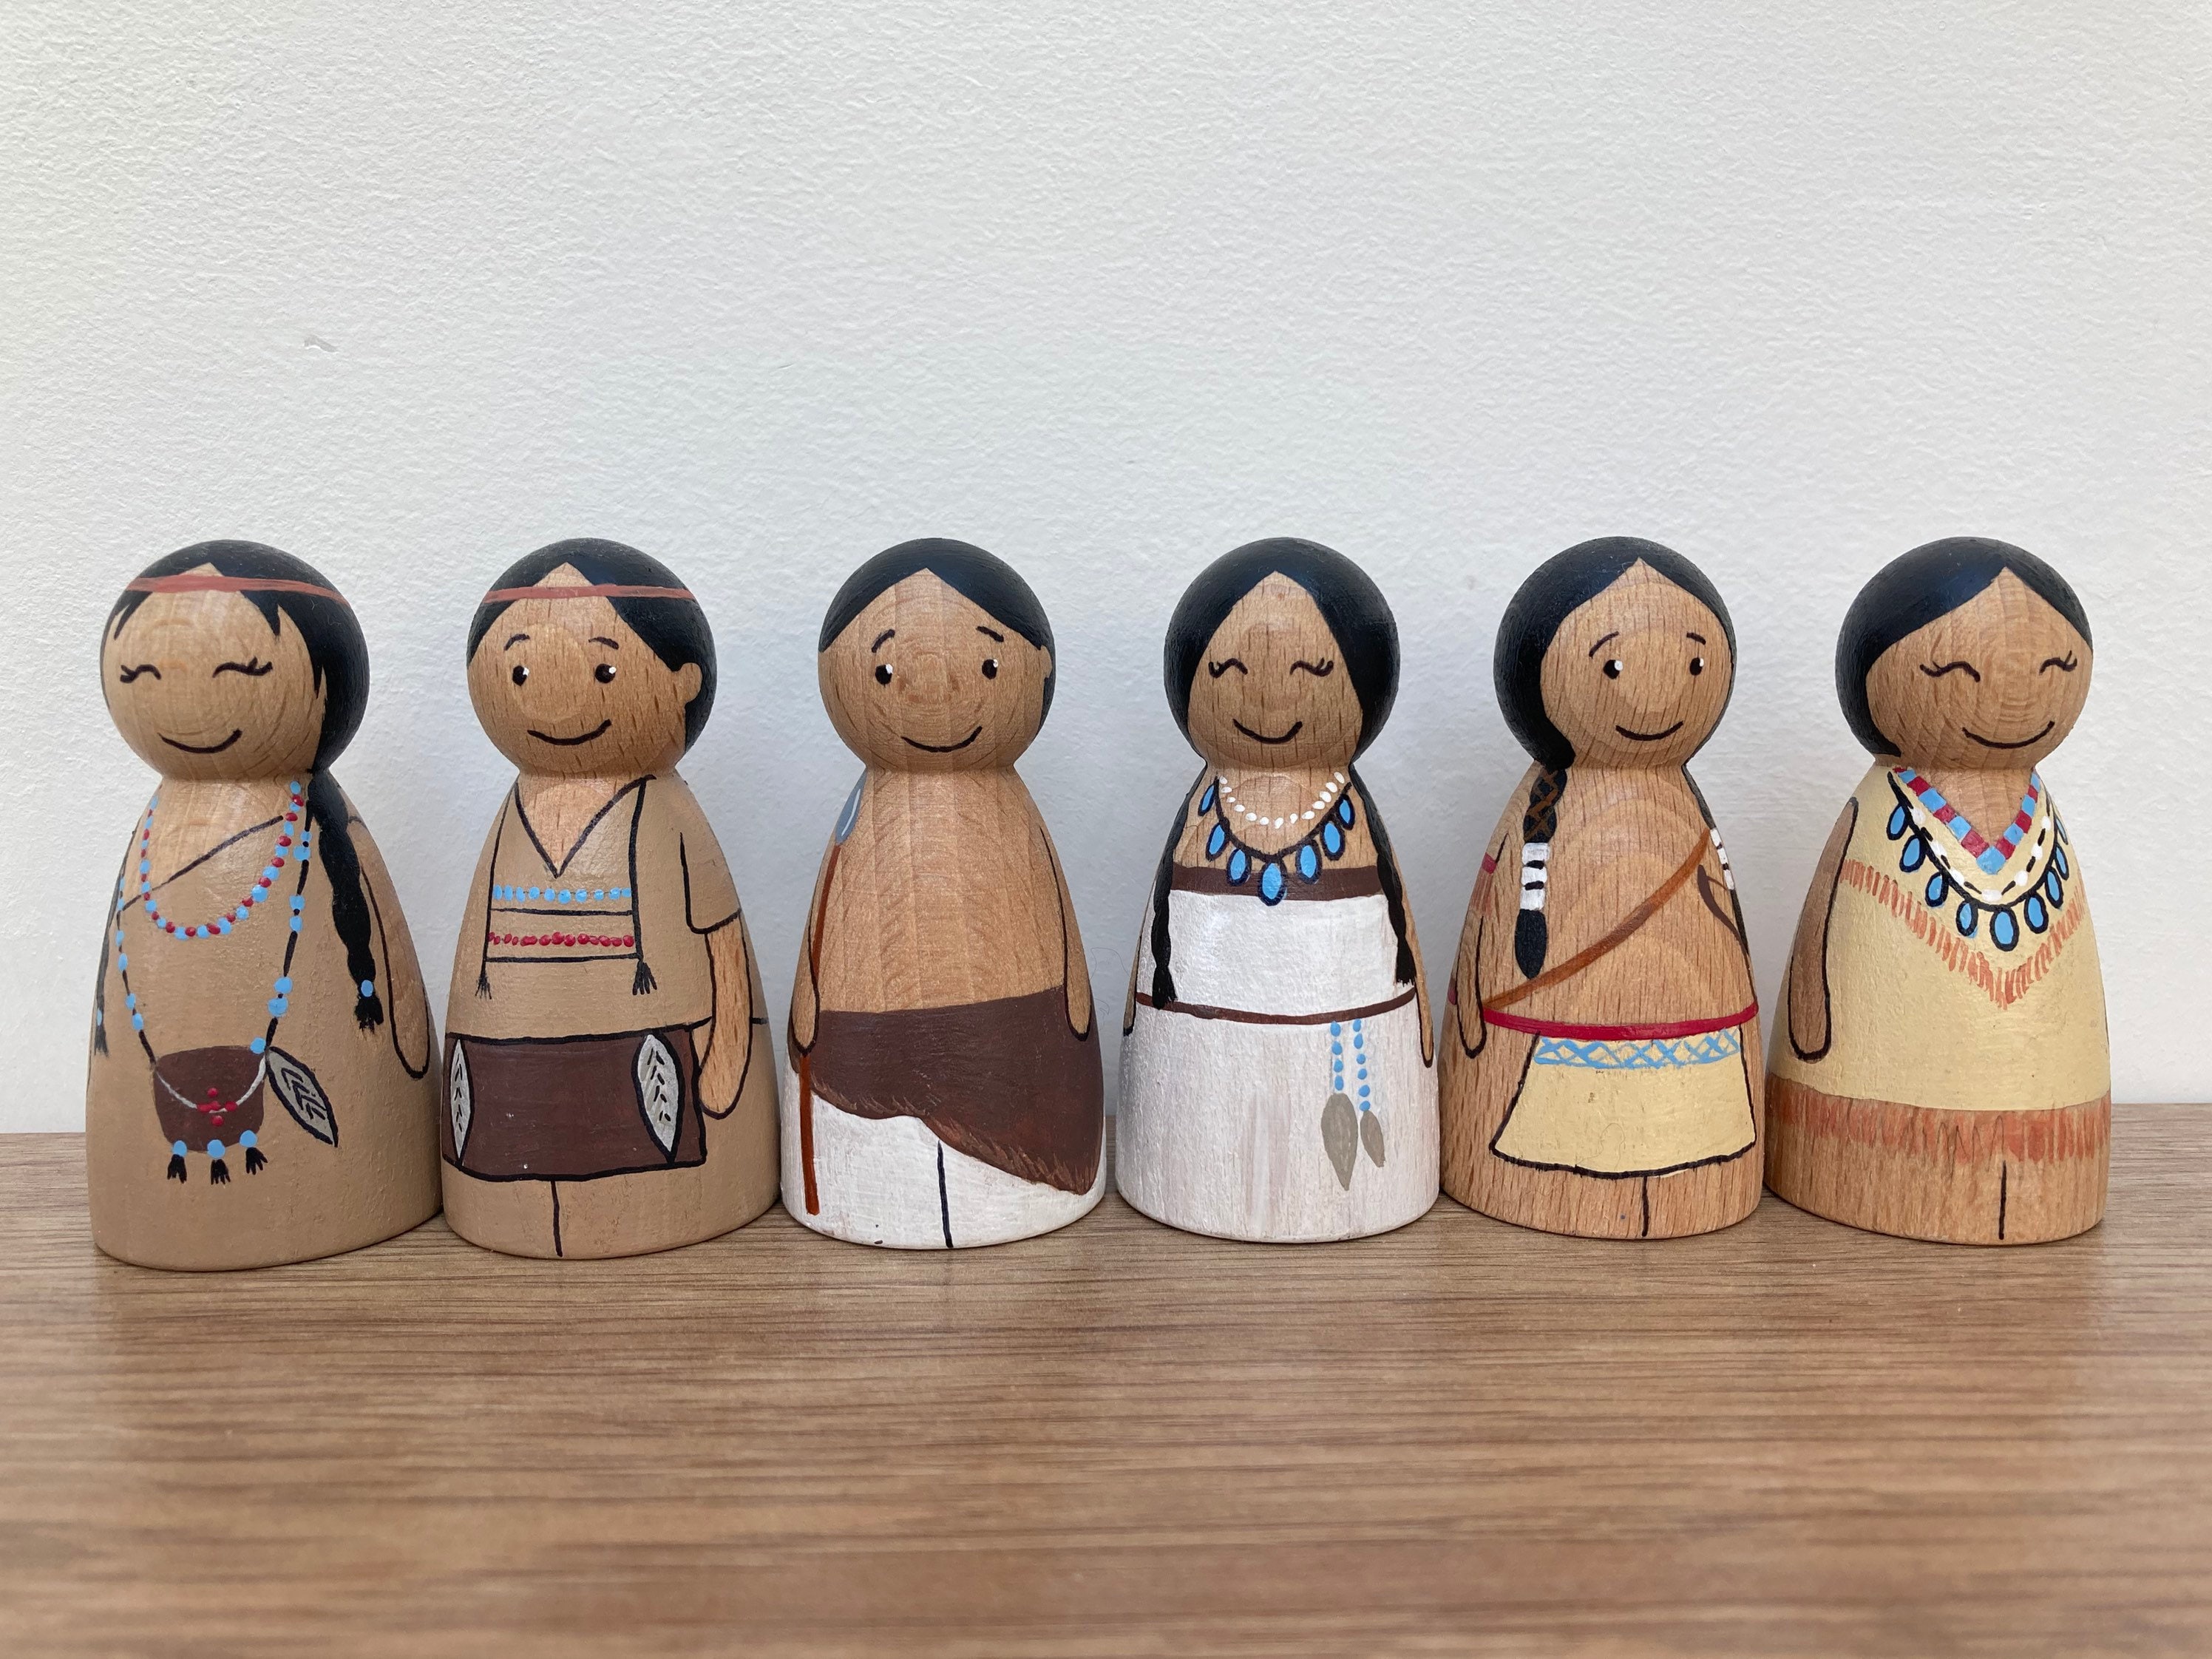 DIY Wooden Peg Dolls Beech Wood Crafts Handmade Blank Toy Nursery